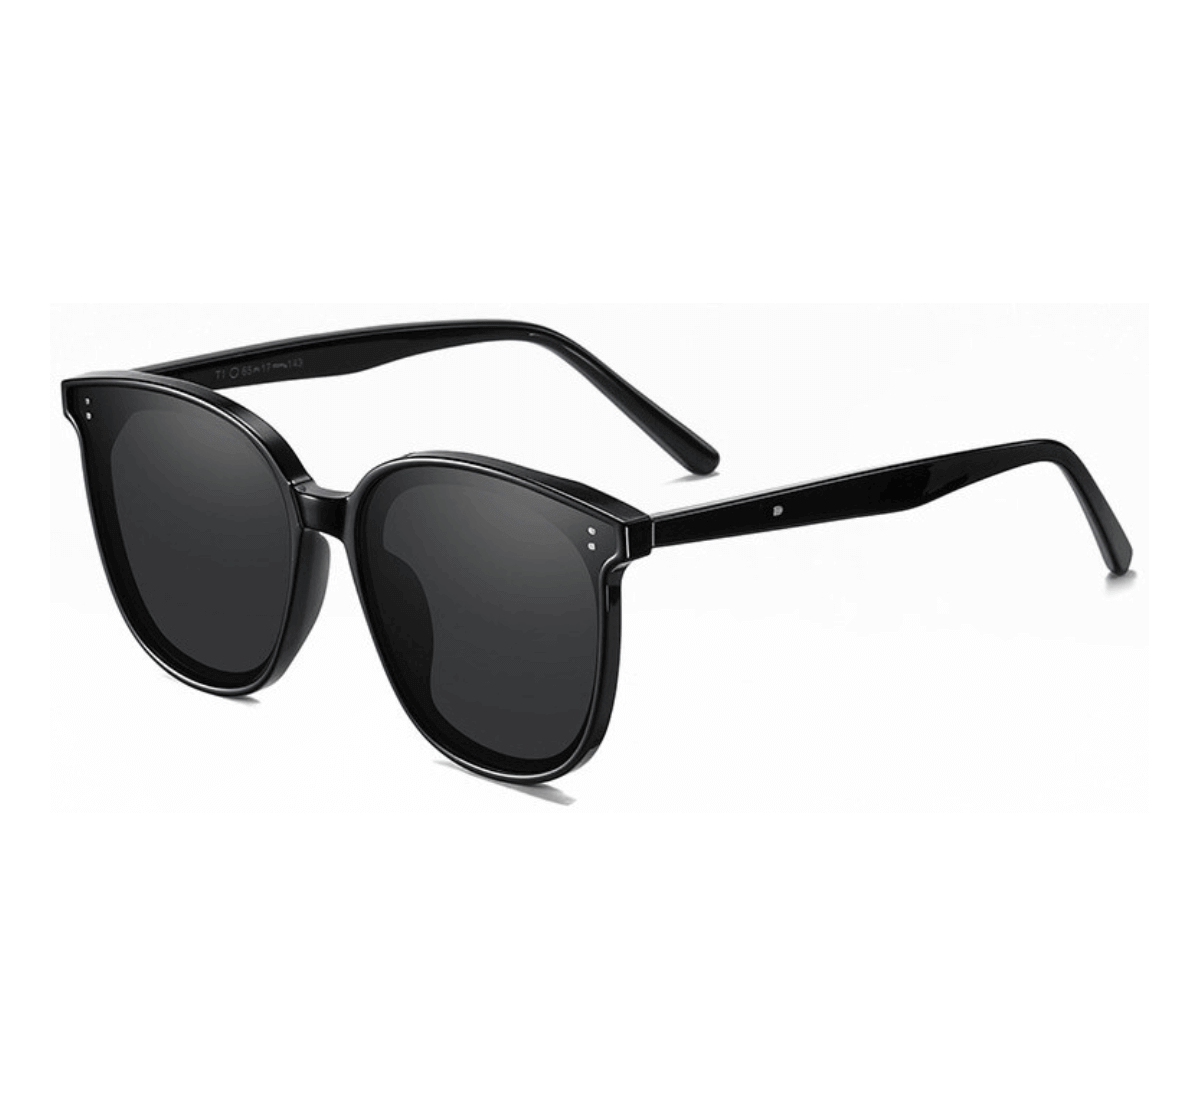 Wholesale Womens Sunglasses, wholesale fashion sunglasses, wholesale trendy sunglasses, sunglasses supplier